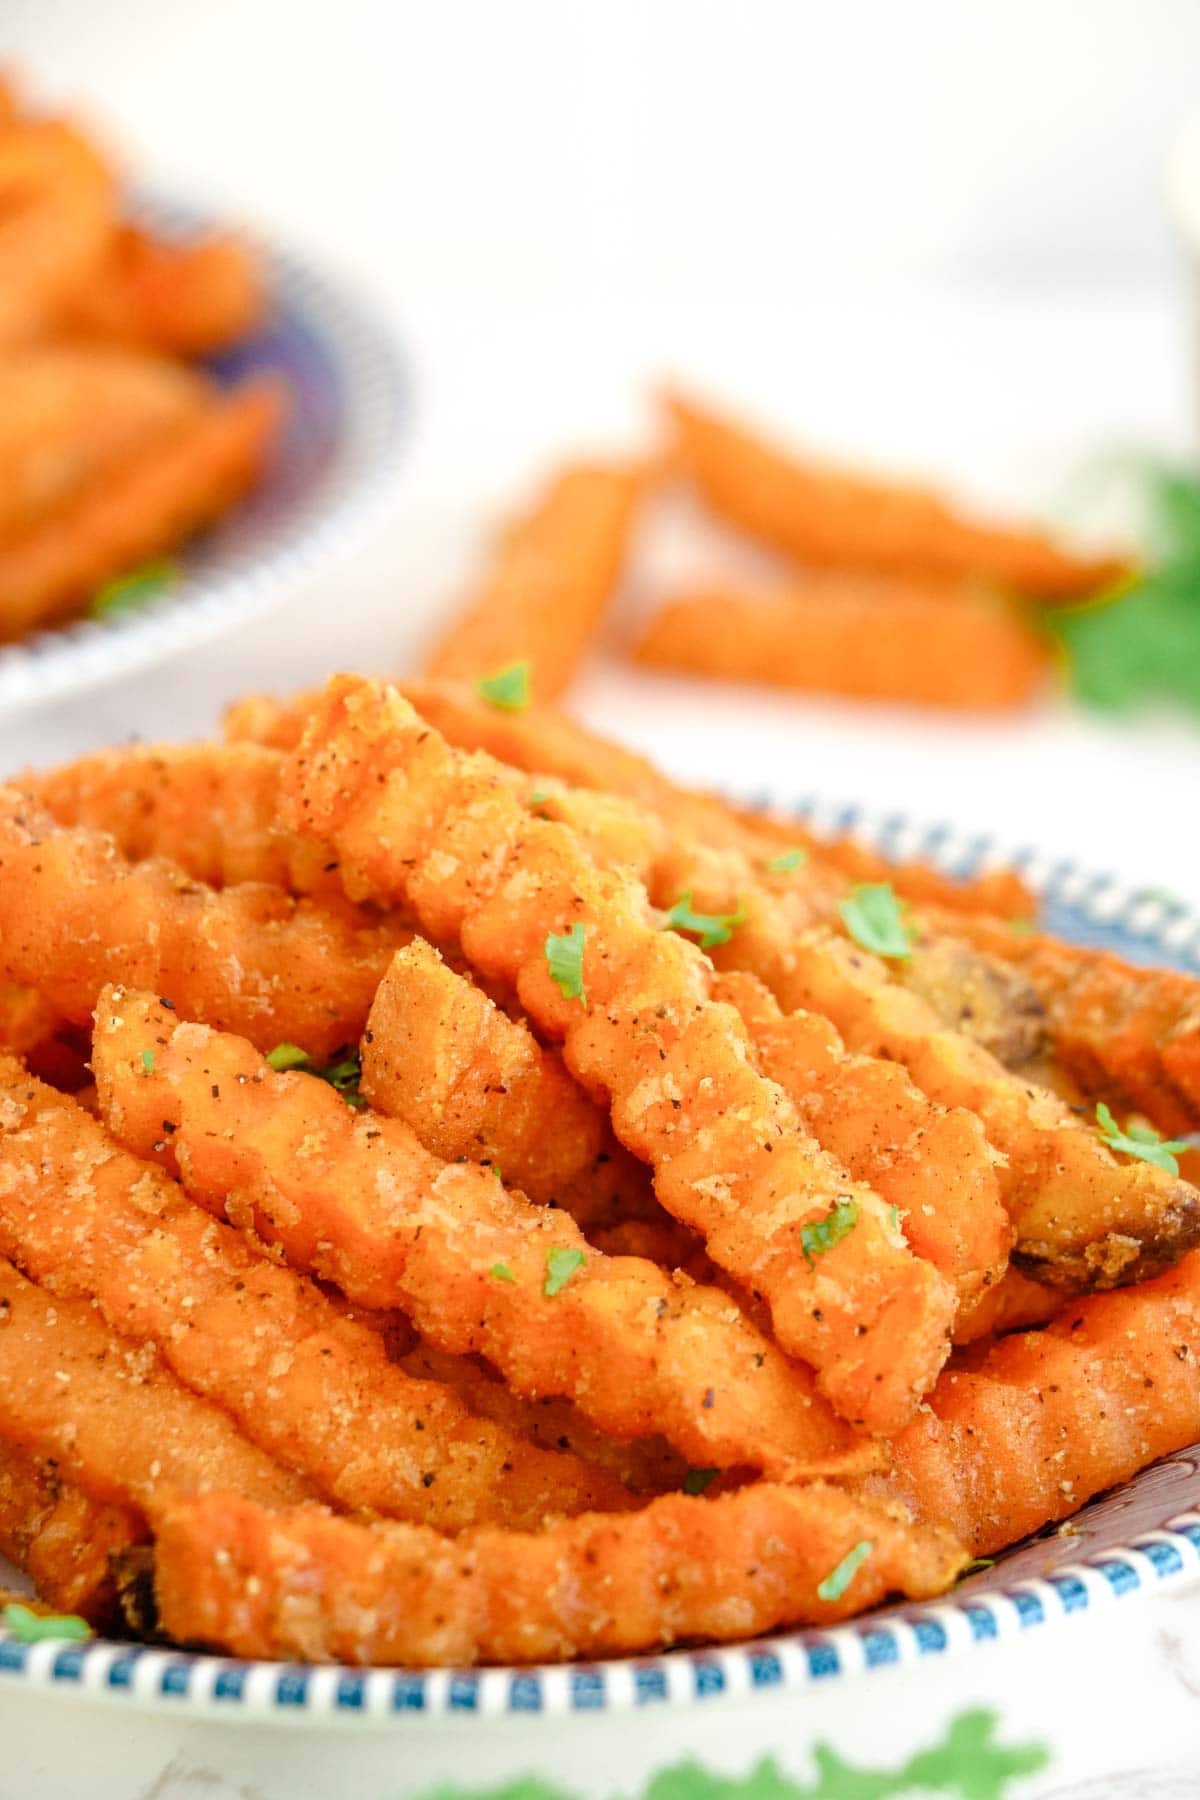 Cluseup view of a platter of crispy air fryer sweet potato fries